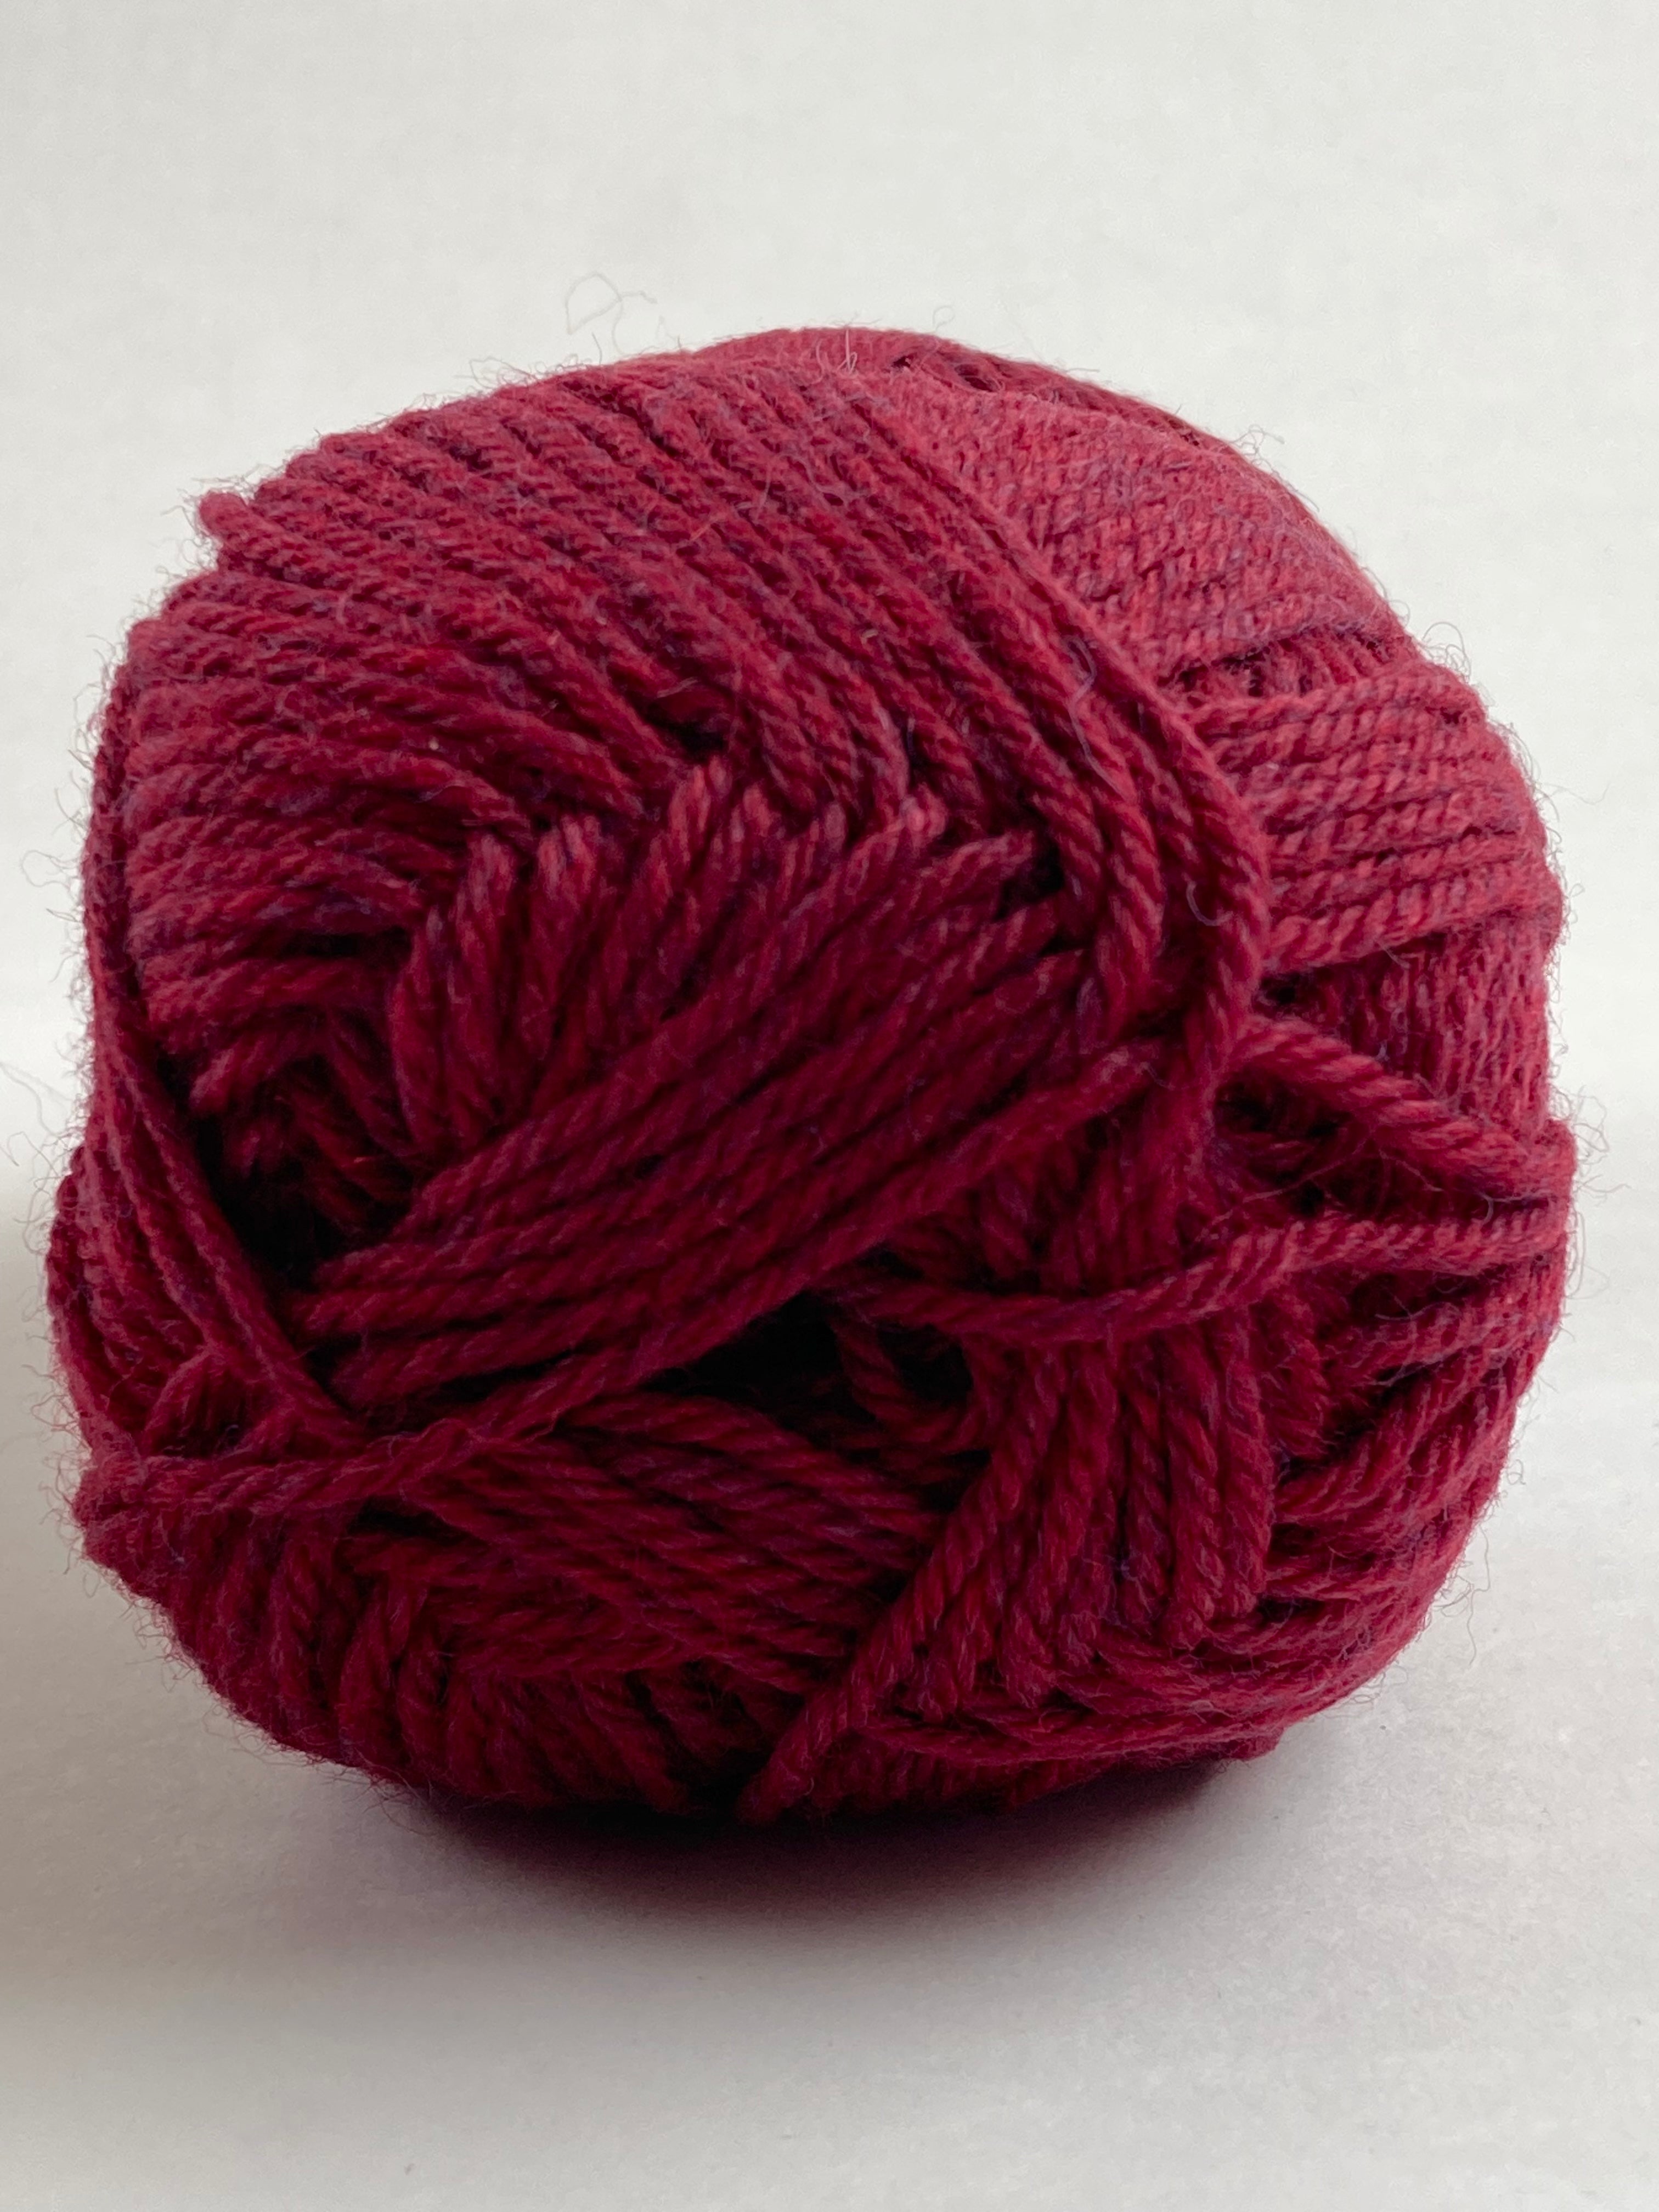 Lanas yarn from Berroco